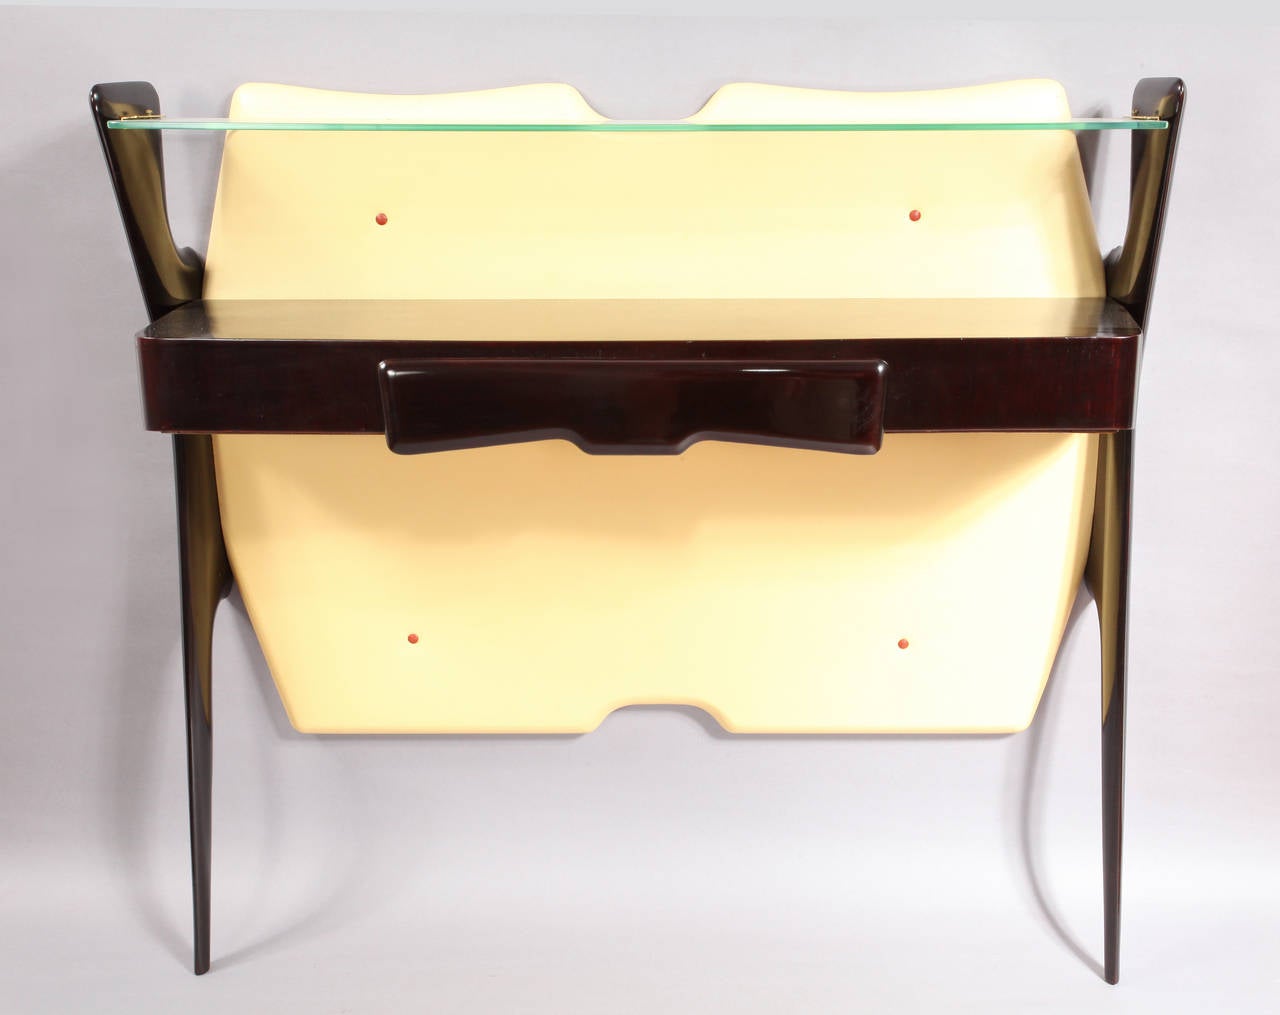 Italian console,
attributed to Ico Parisi,
Italian 1950.
Two legs, single-drawer, glass shelf.

Dimensions: width 37 inch (97cm),
depth 12 inch (30cm)
height 35 inch (89cm).